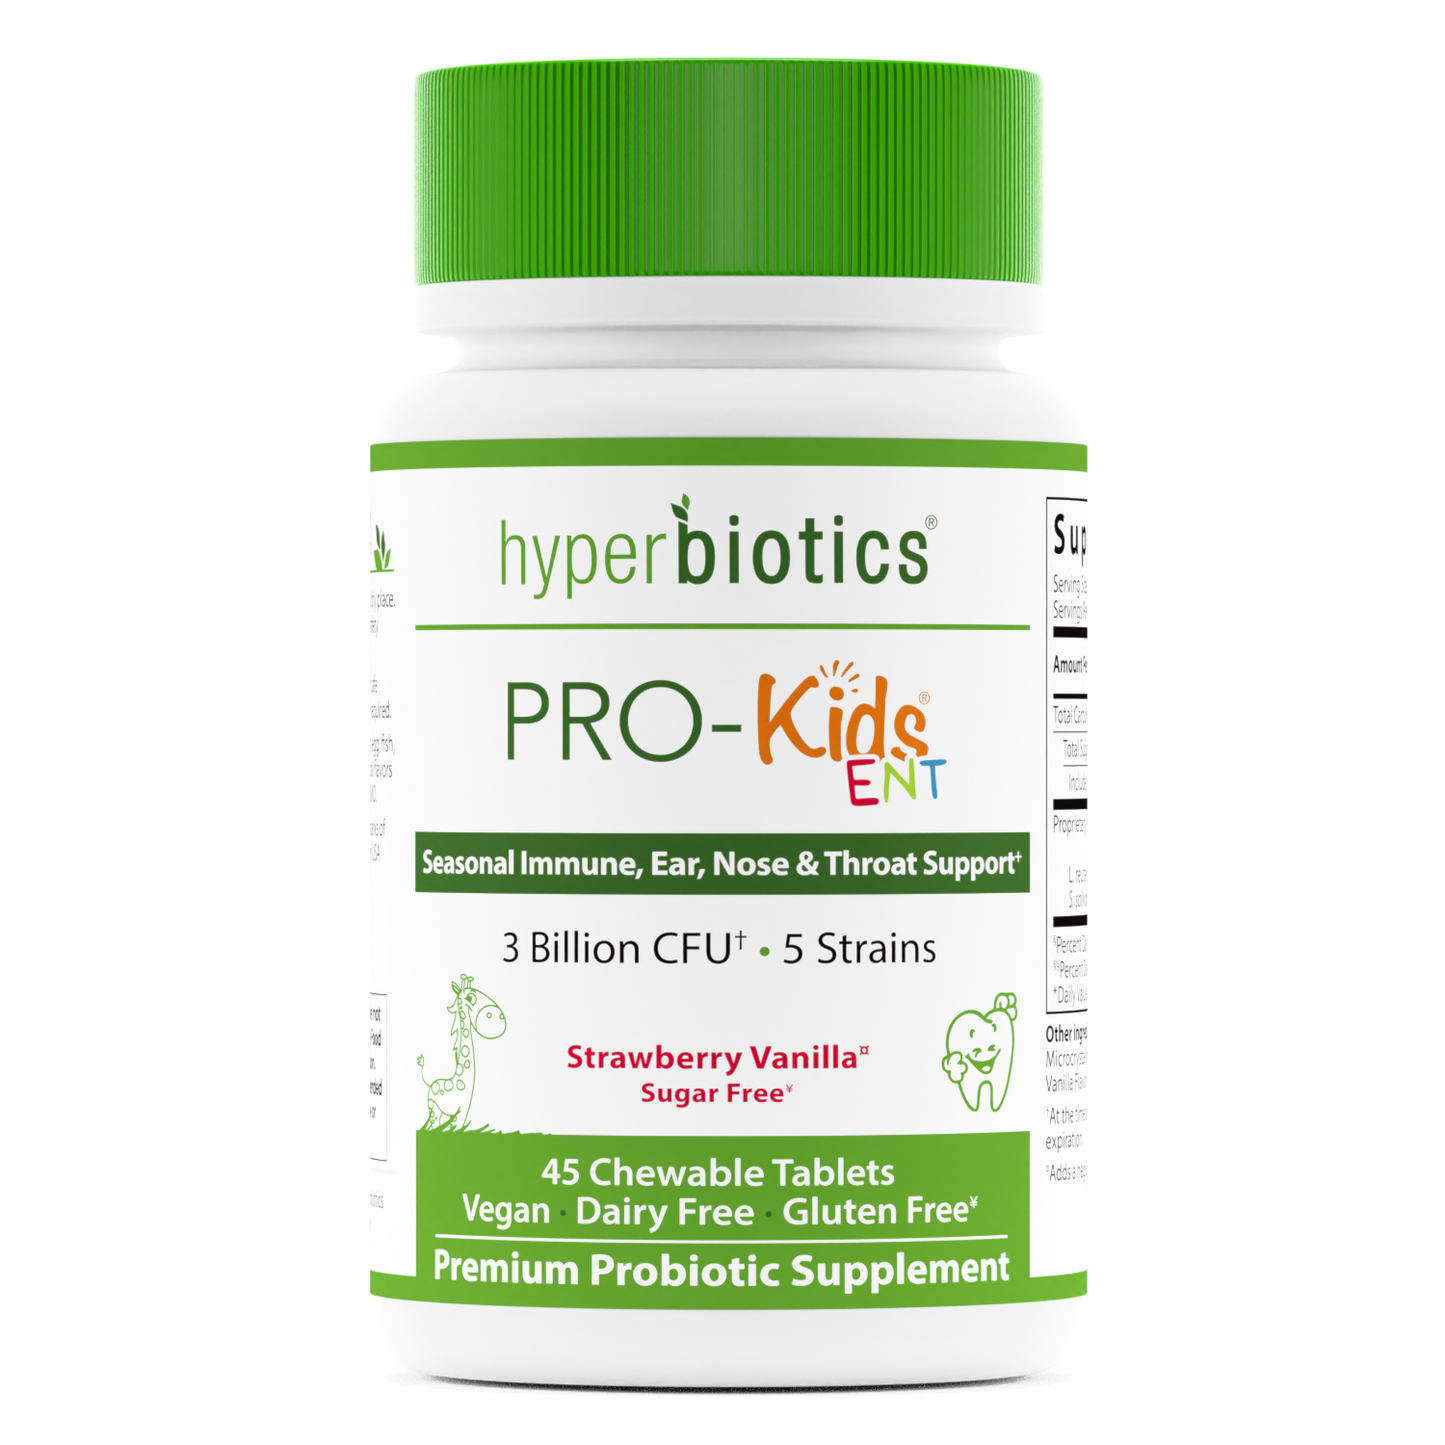 Pro-Kids ENT: Seasonal Immune, Ear, Nose & Throat Support* - Hyperbiotics